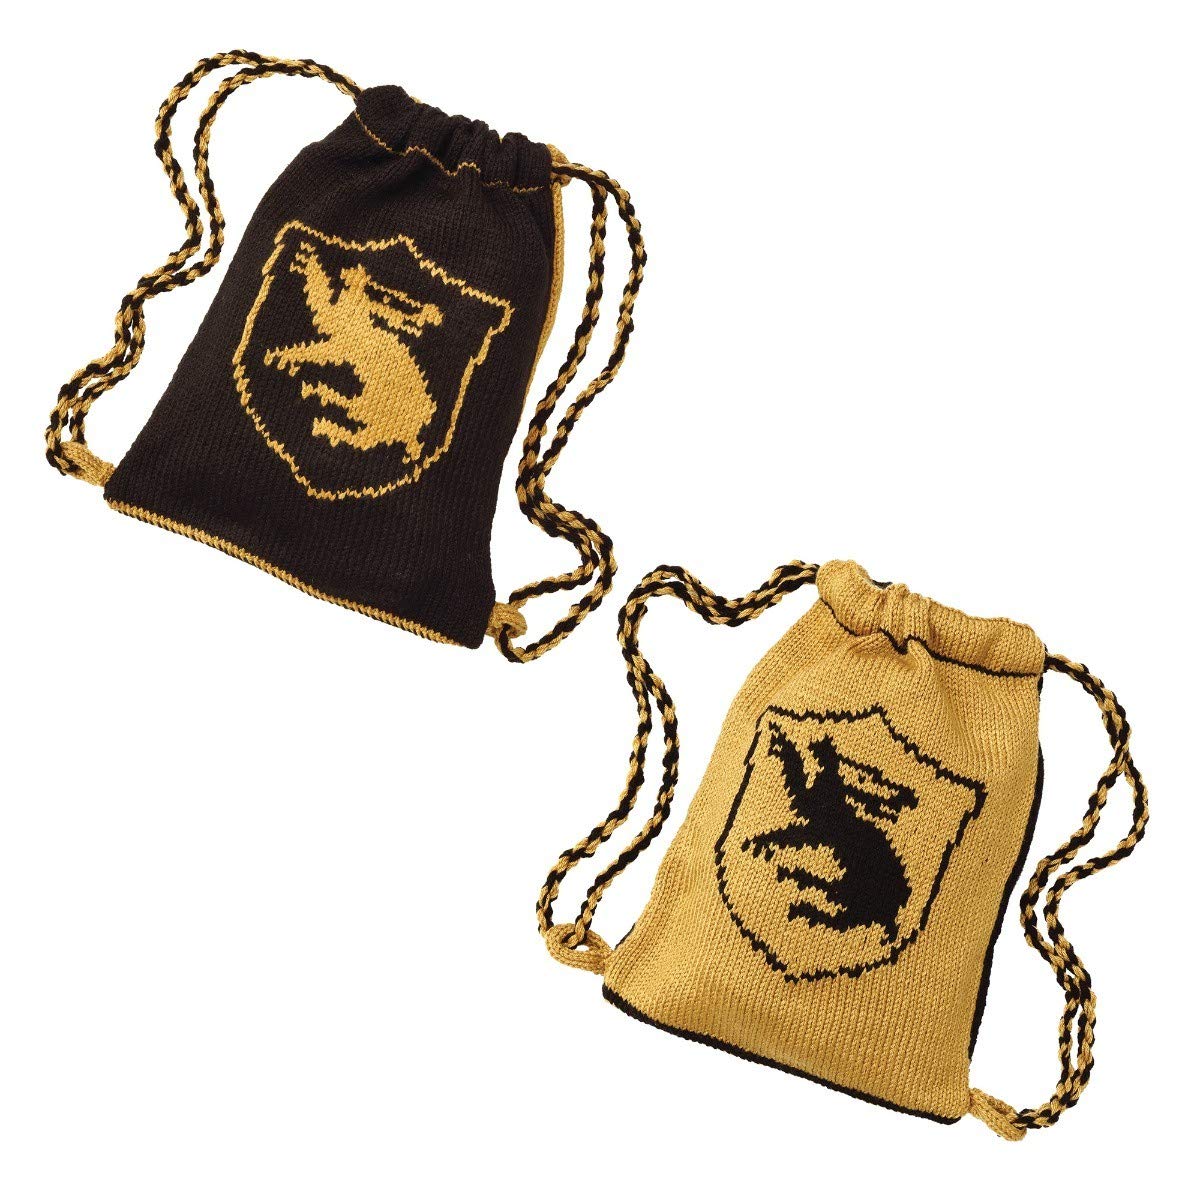 Eaglemoss Hero Collector Hogwarts Hufflepuff Reversible Backpack Knitting Kit | Harry Potter Wizarding World Knitting Kits | Model Replica